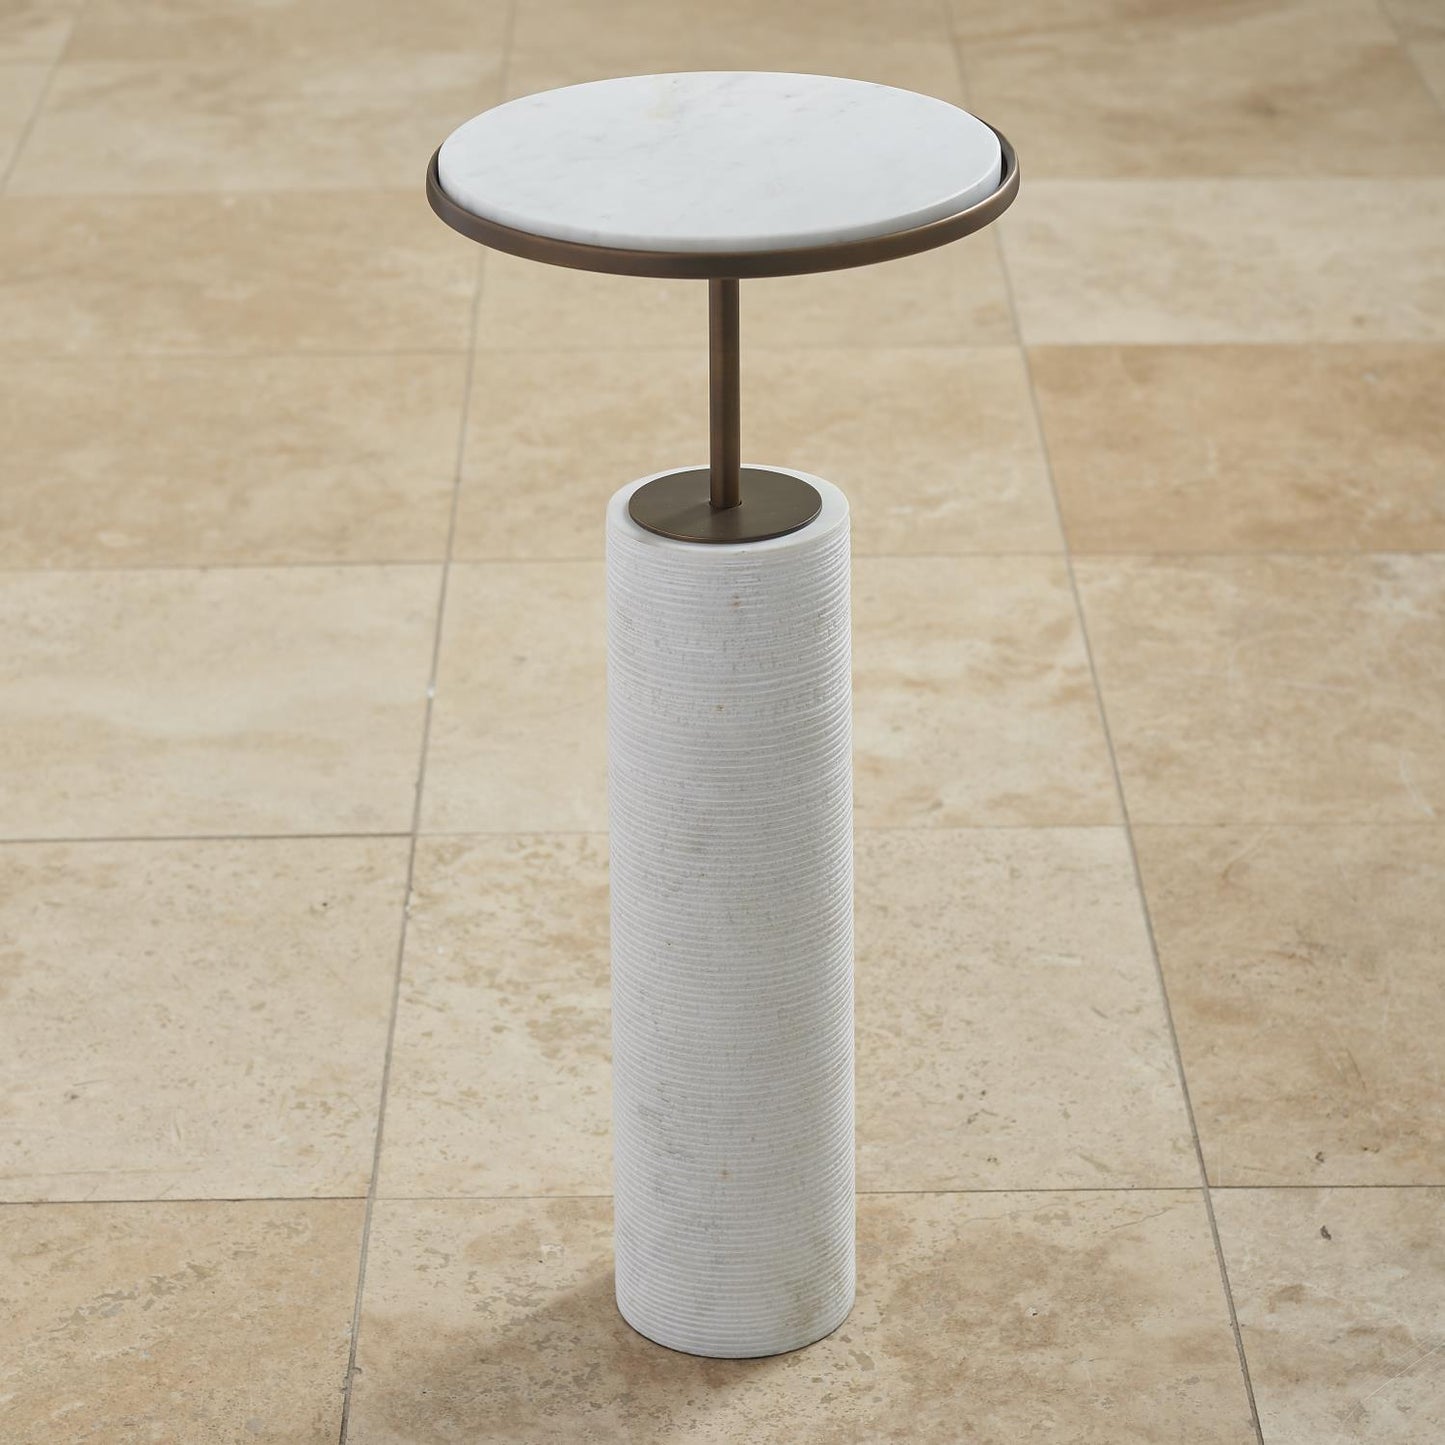 Tall Cored Marble Table - Bronze - Grats Decor Interior Design & Build Inc.